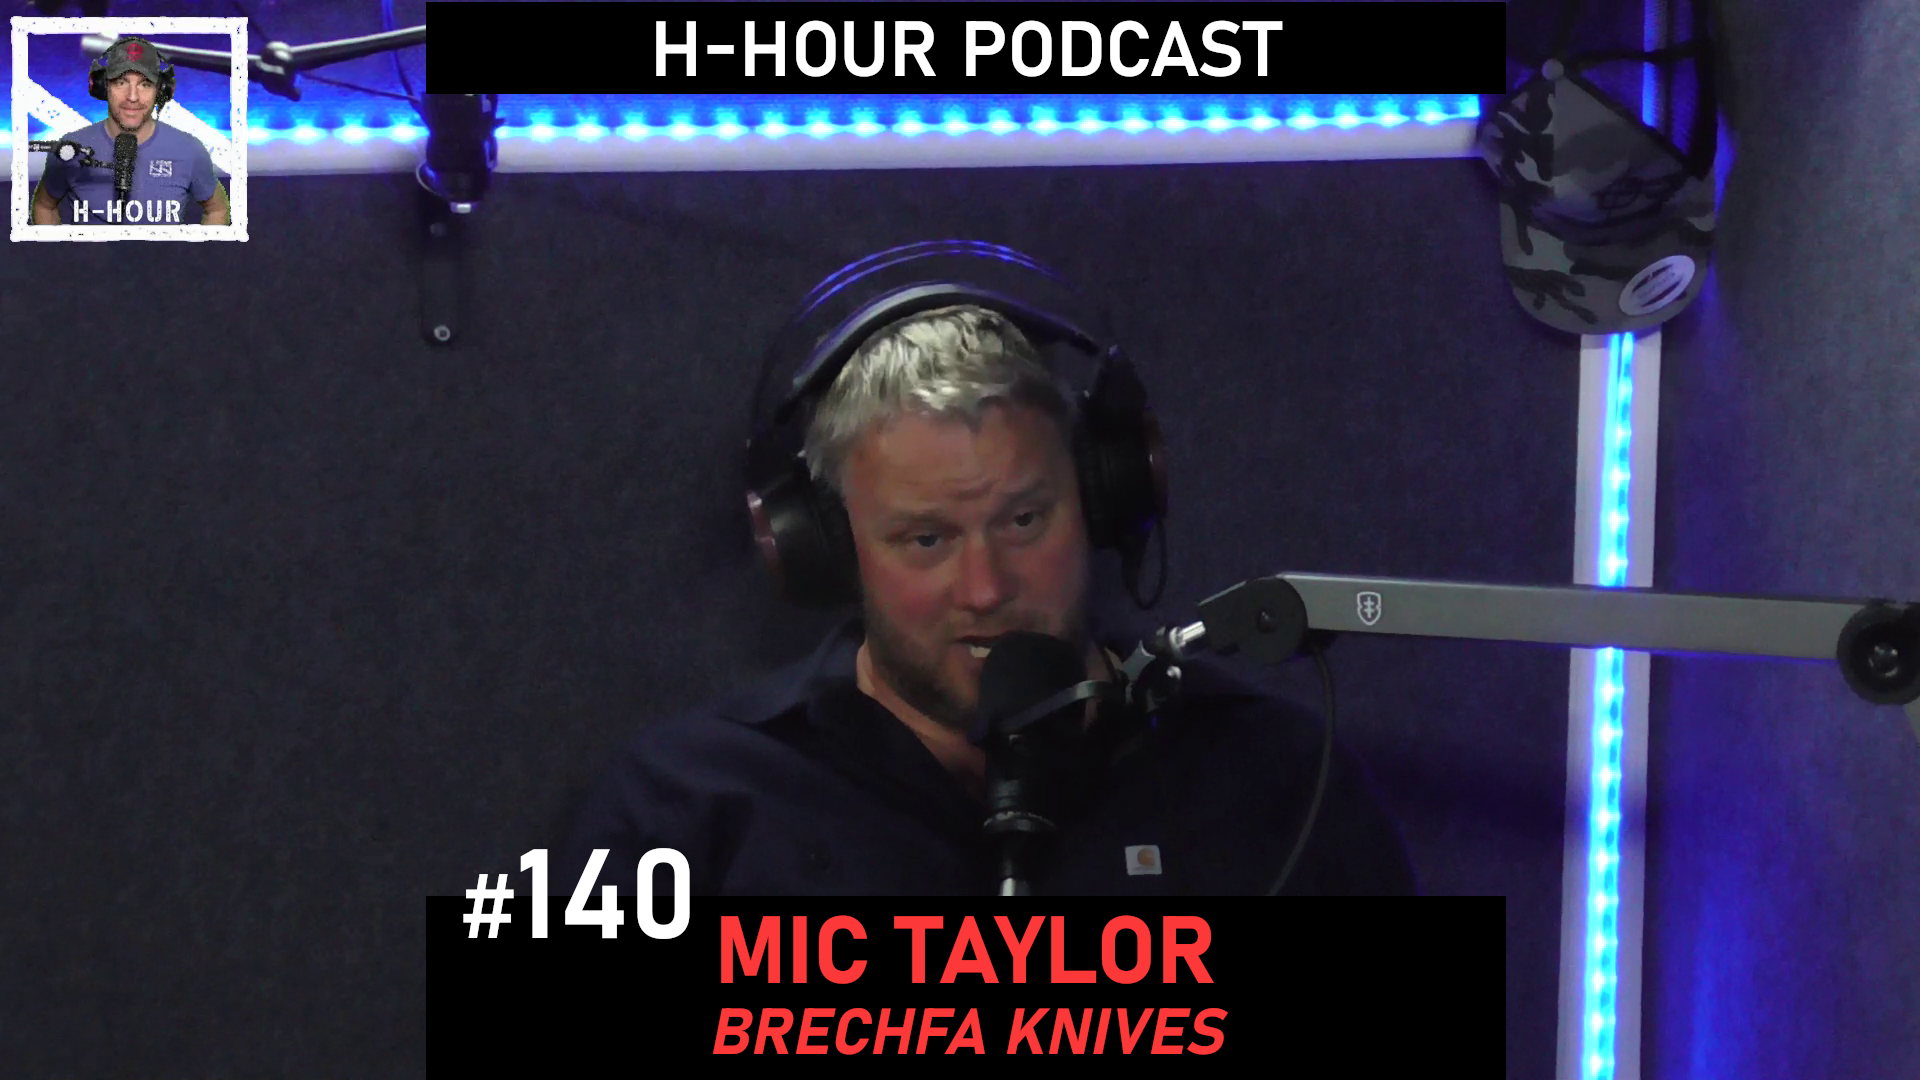 mic taylor brechfa knives h-hour podcast hugh keir